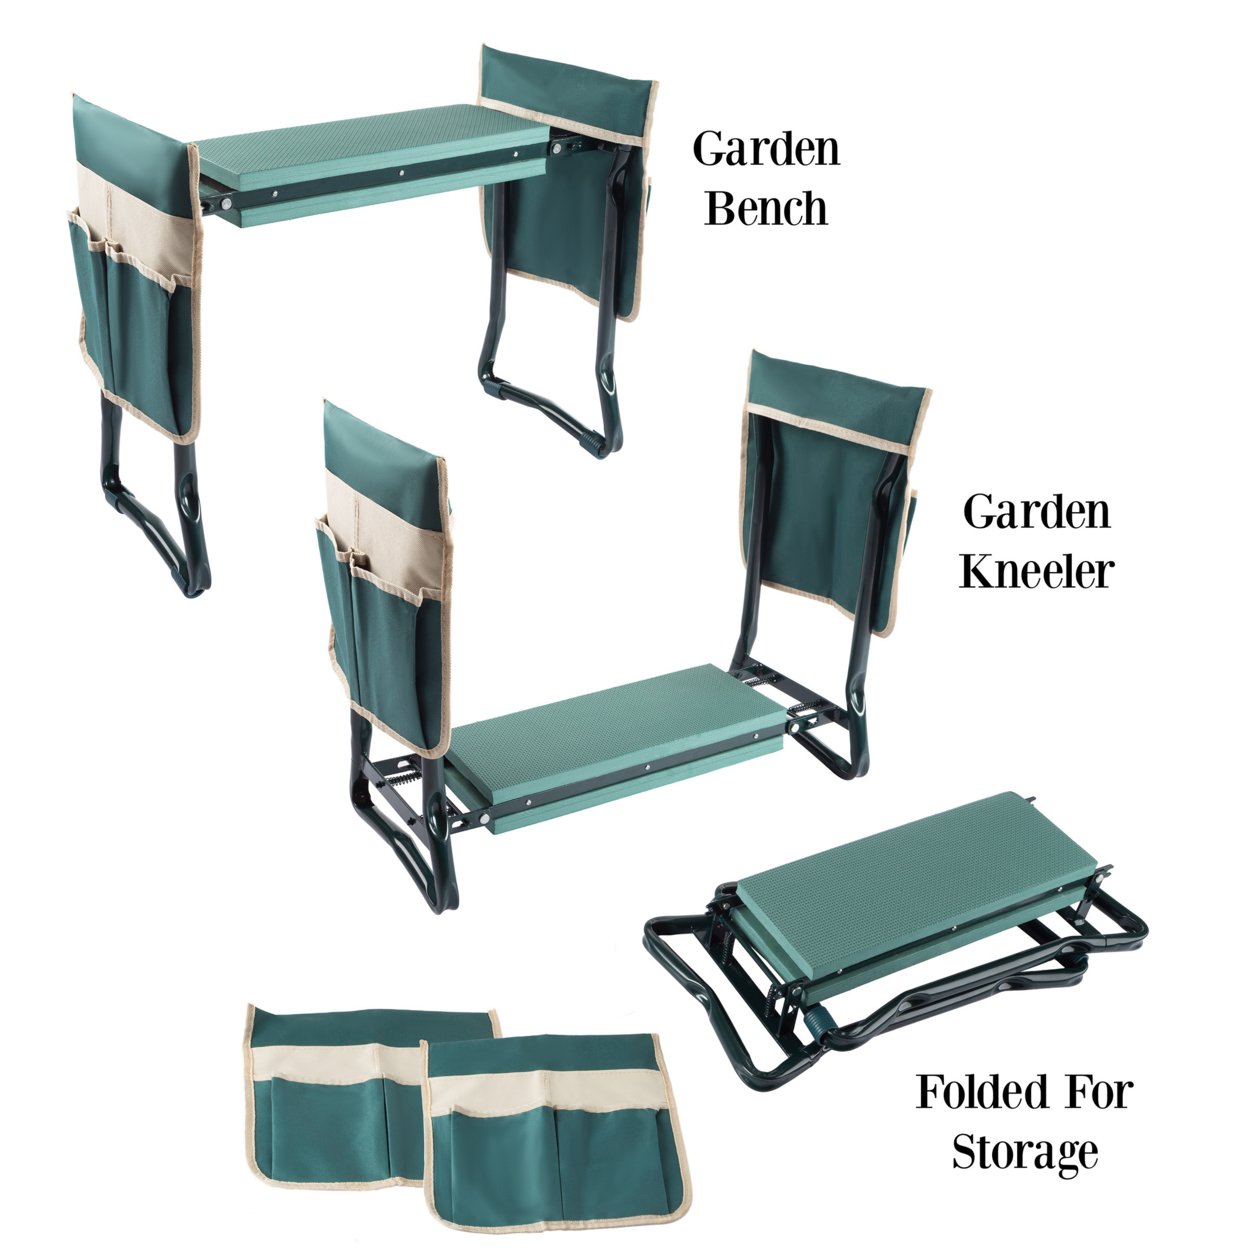 Gardening Kneeling Bench- Foldable Foam Pad Stool For Kneelers- 2 Tool Pouches & Handles Gardening Yardwork